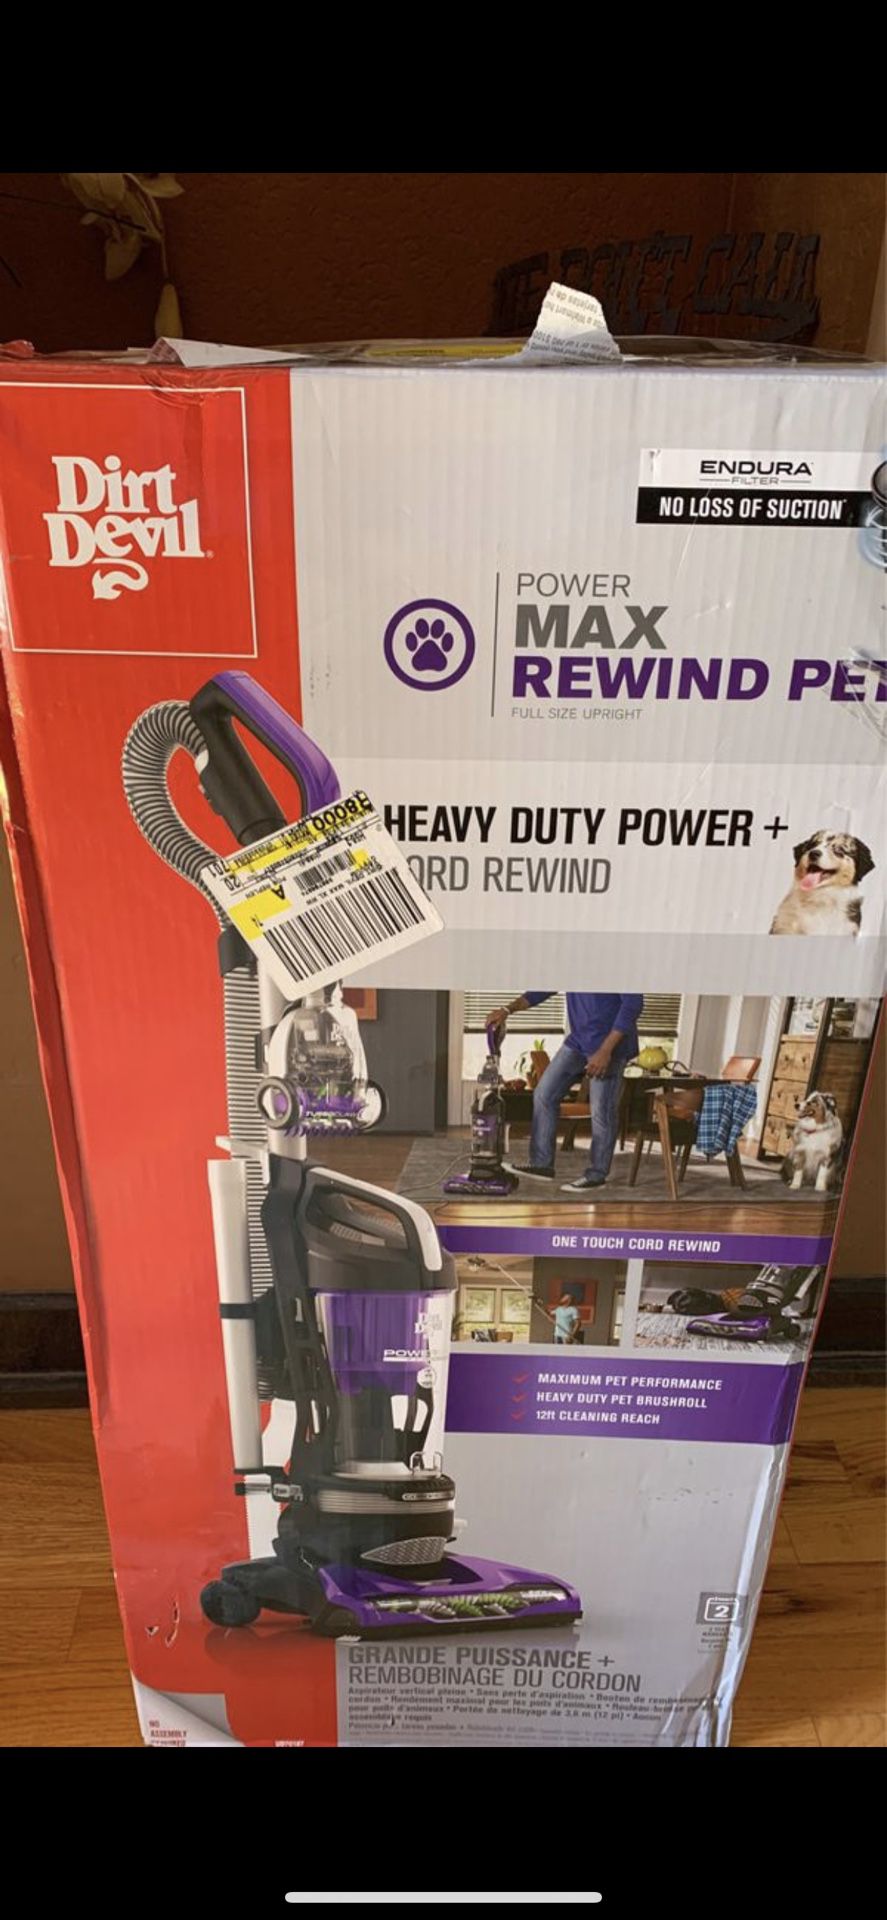 dirtdevil power max pet vacuum cleaner